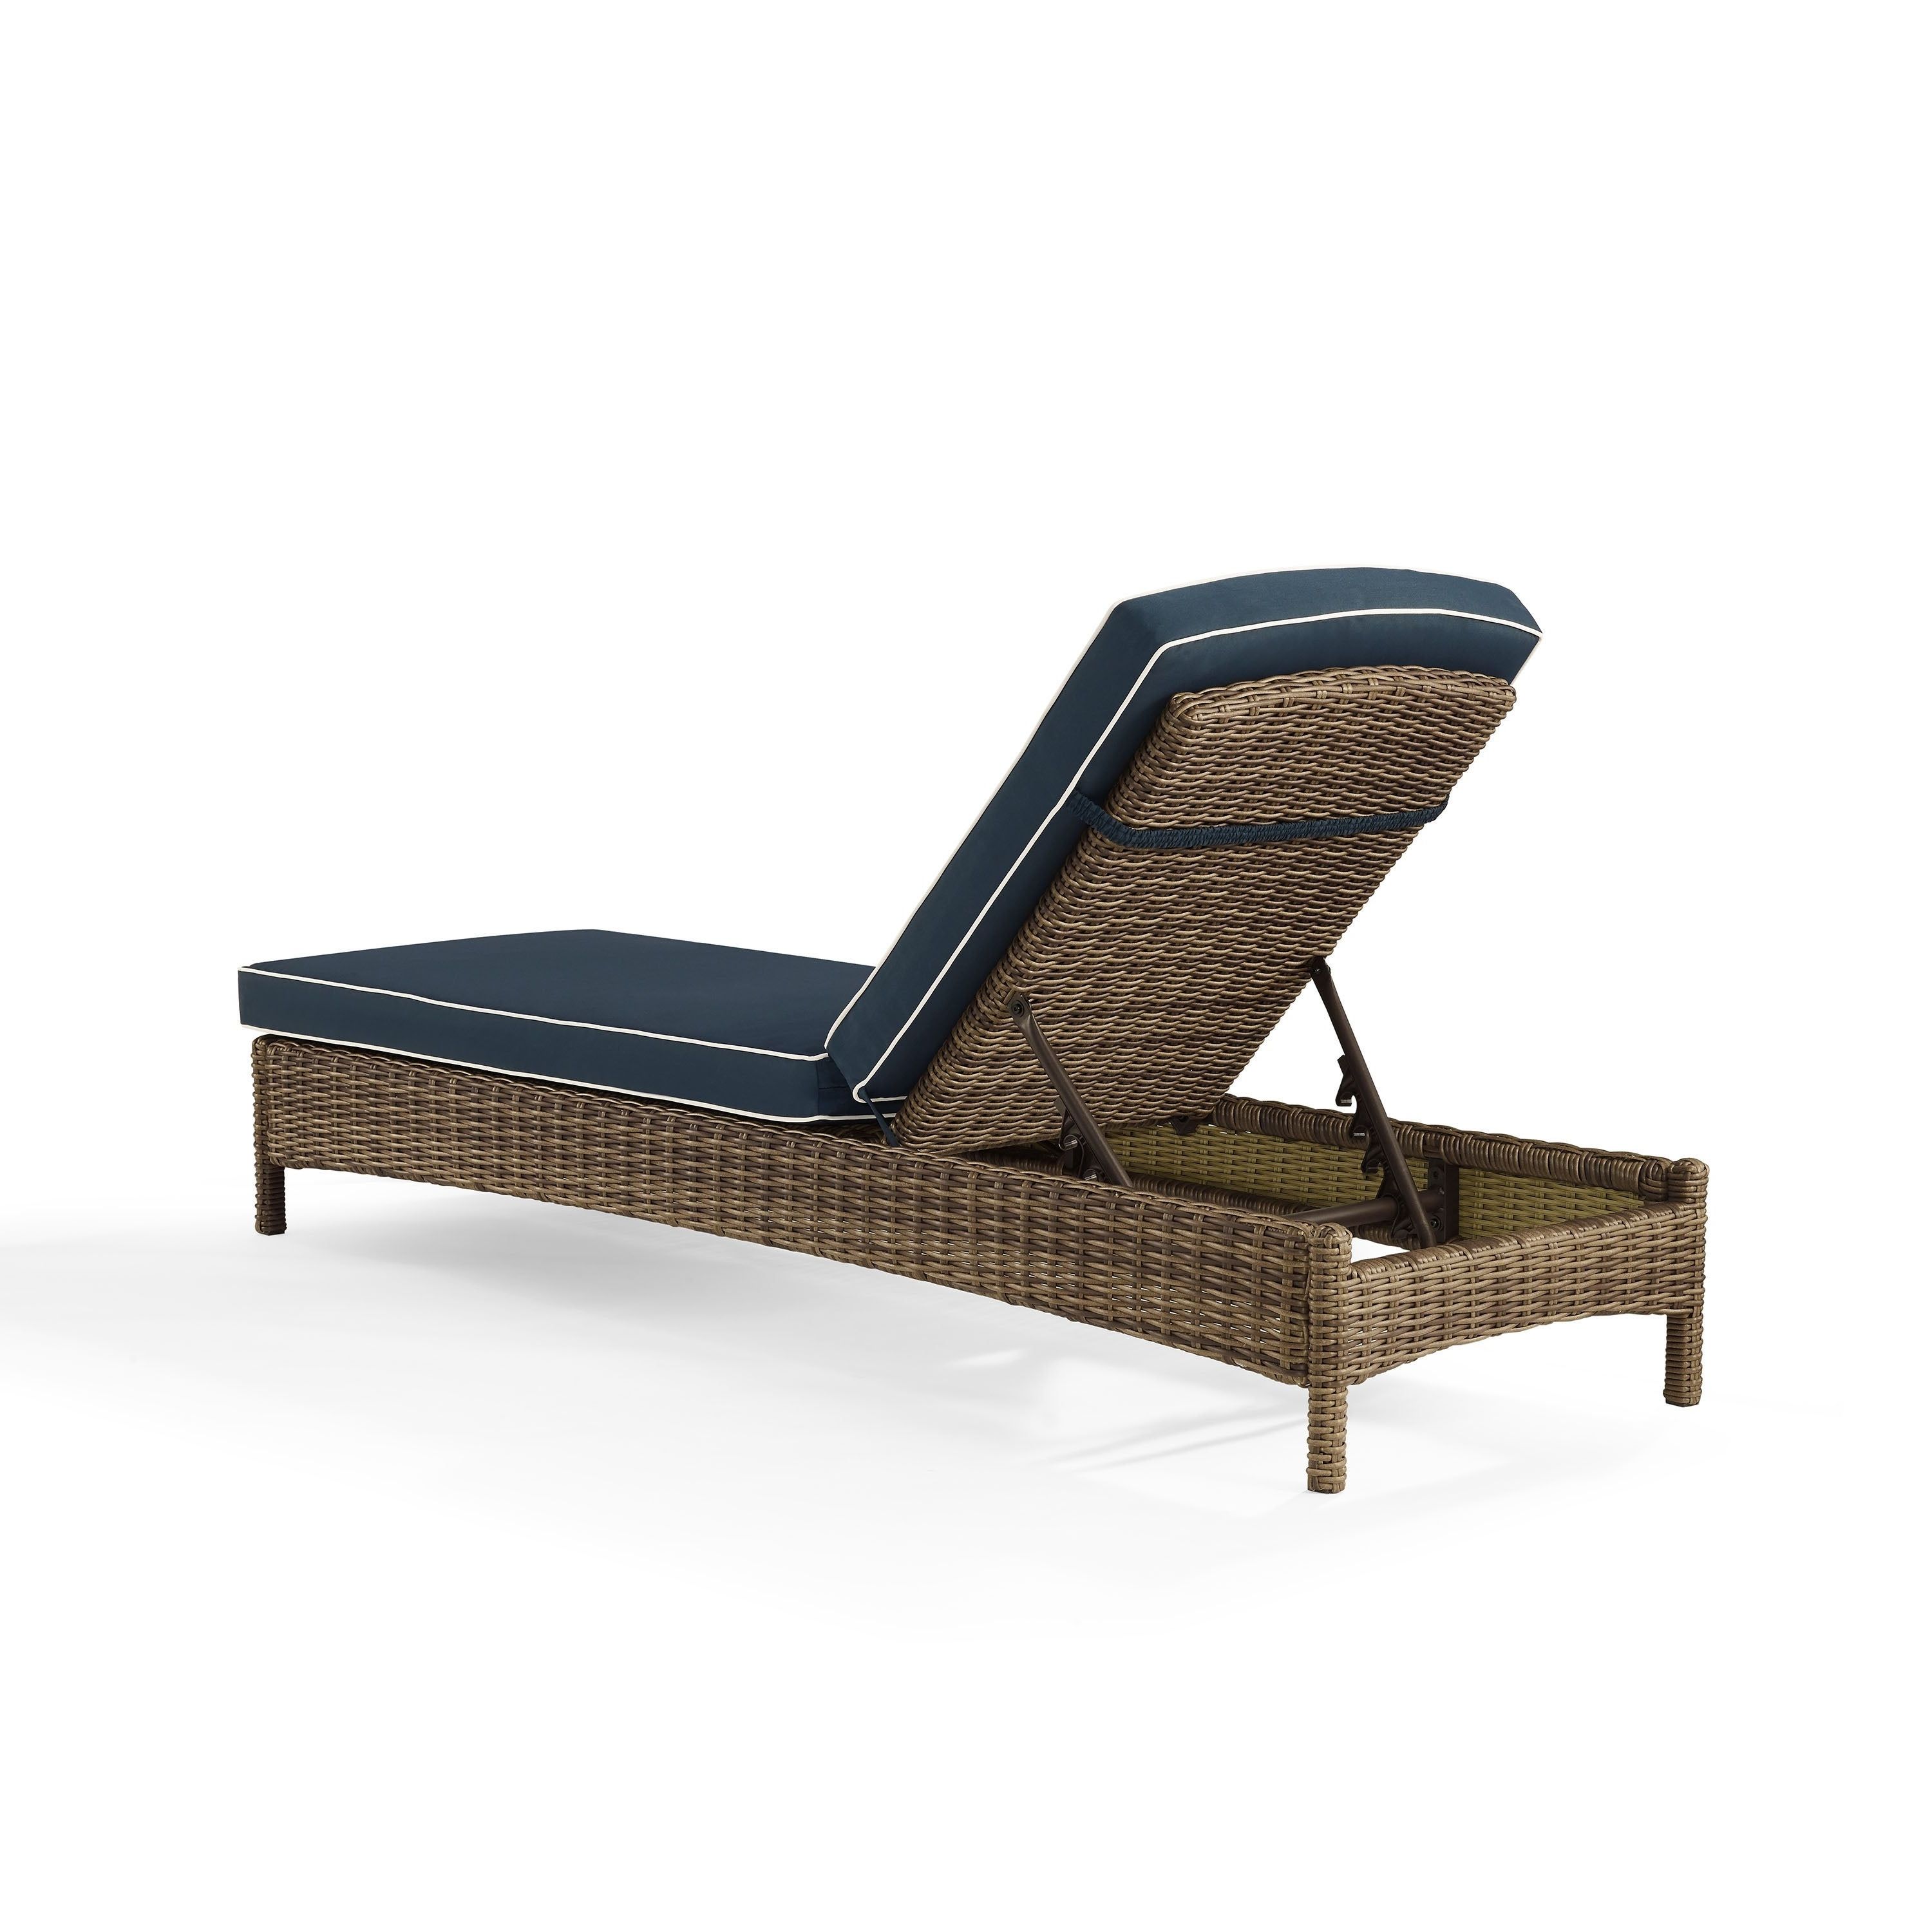 Newest Bradenton Outdoor Wicker Chaise Lounge With Navy Cushions Within Bradenton Outdoor Wicker Chaise Lounges With Cushions (View 4 of 25)